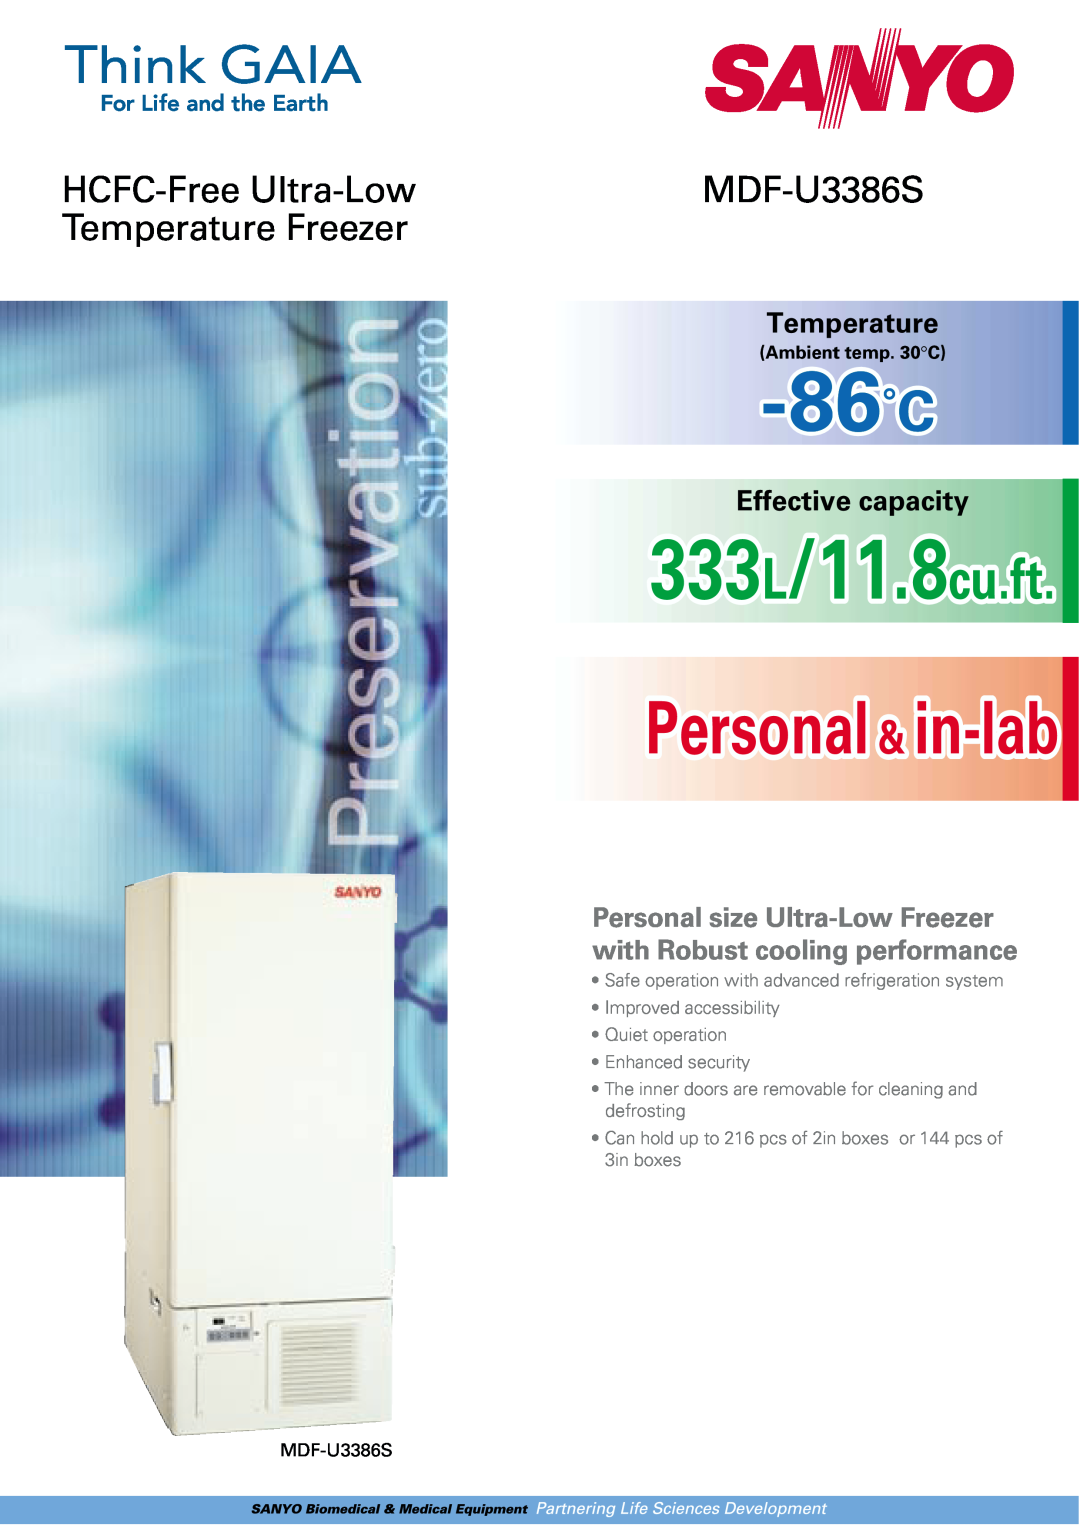 Sanyo MDF-U3386S manual Ambient temp. 30C, 86˚C, 333L/11.8cu.ft, Personal & in-lab, HCFC-Free Ultra-Low, Temperature 